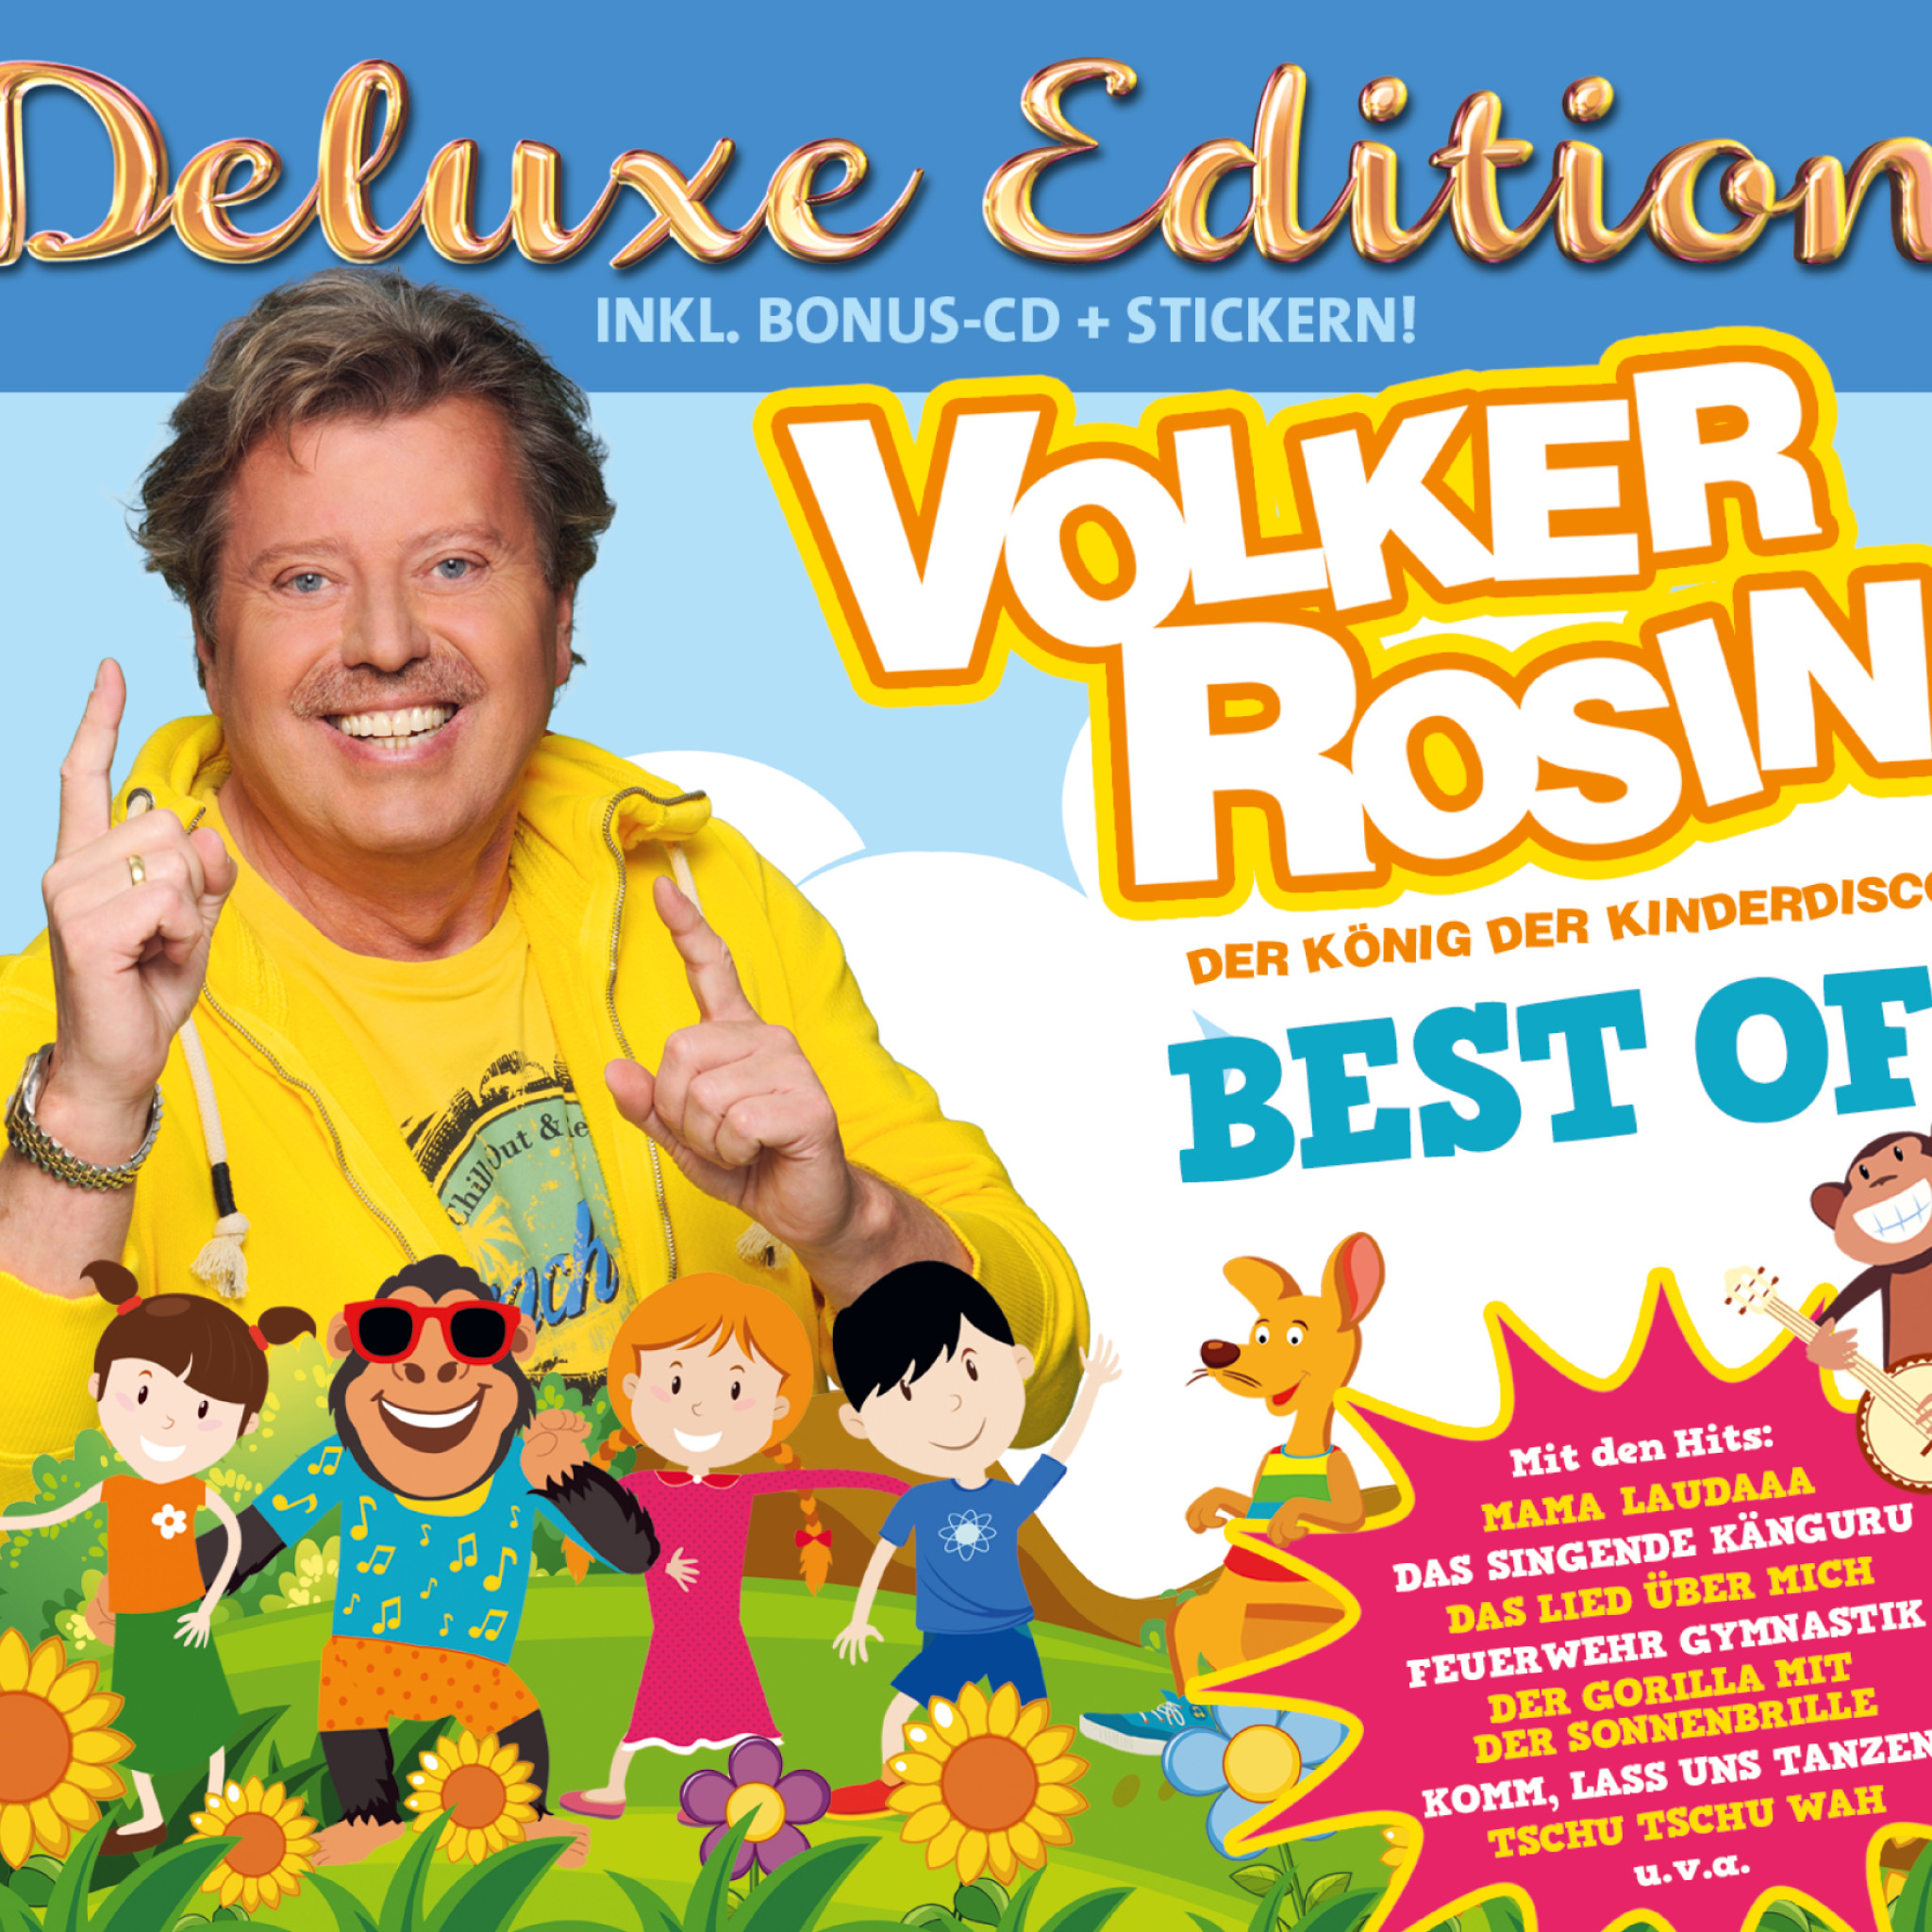 Cover Volker Rosin Best of Deluxe Edition neu